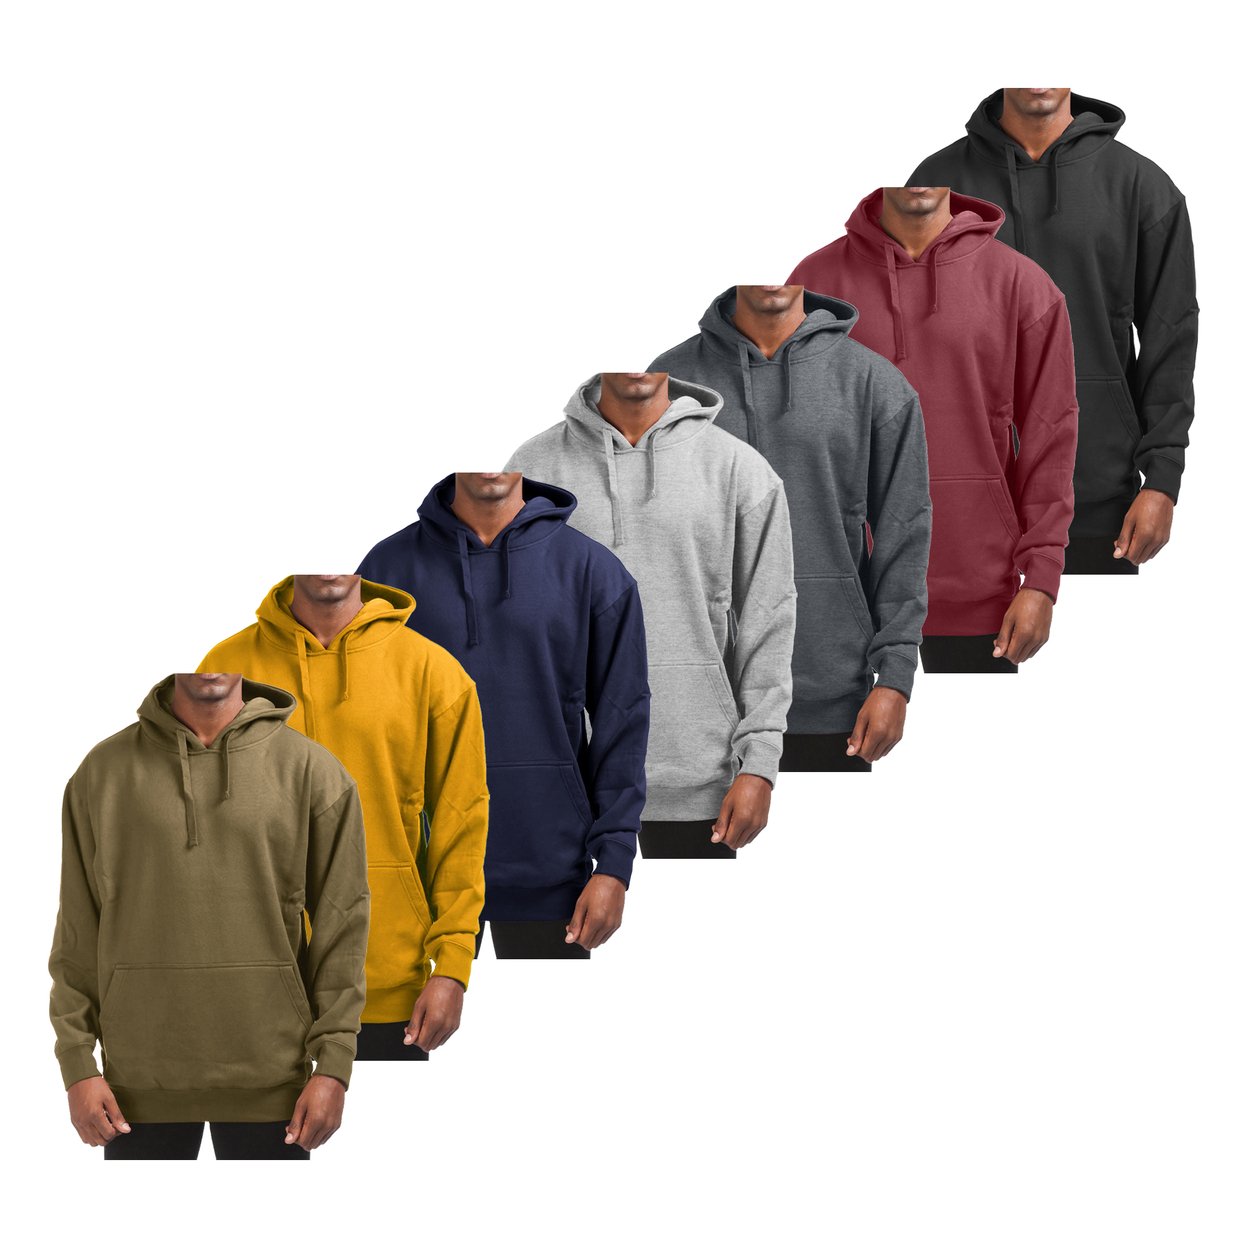 2-Pack: Men's Super-Soft Winter Warm Cotton-Blend Fleece Pullover Hoodie With Kangaroo Pocket - Black & Navy, Xx-large